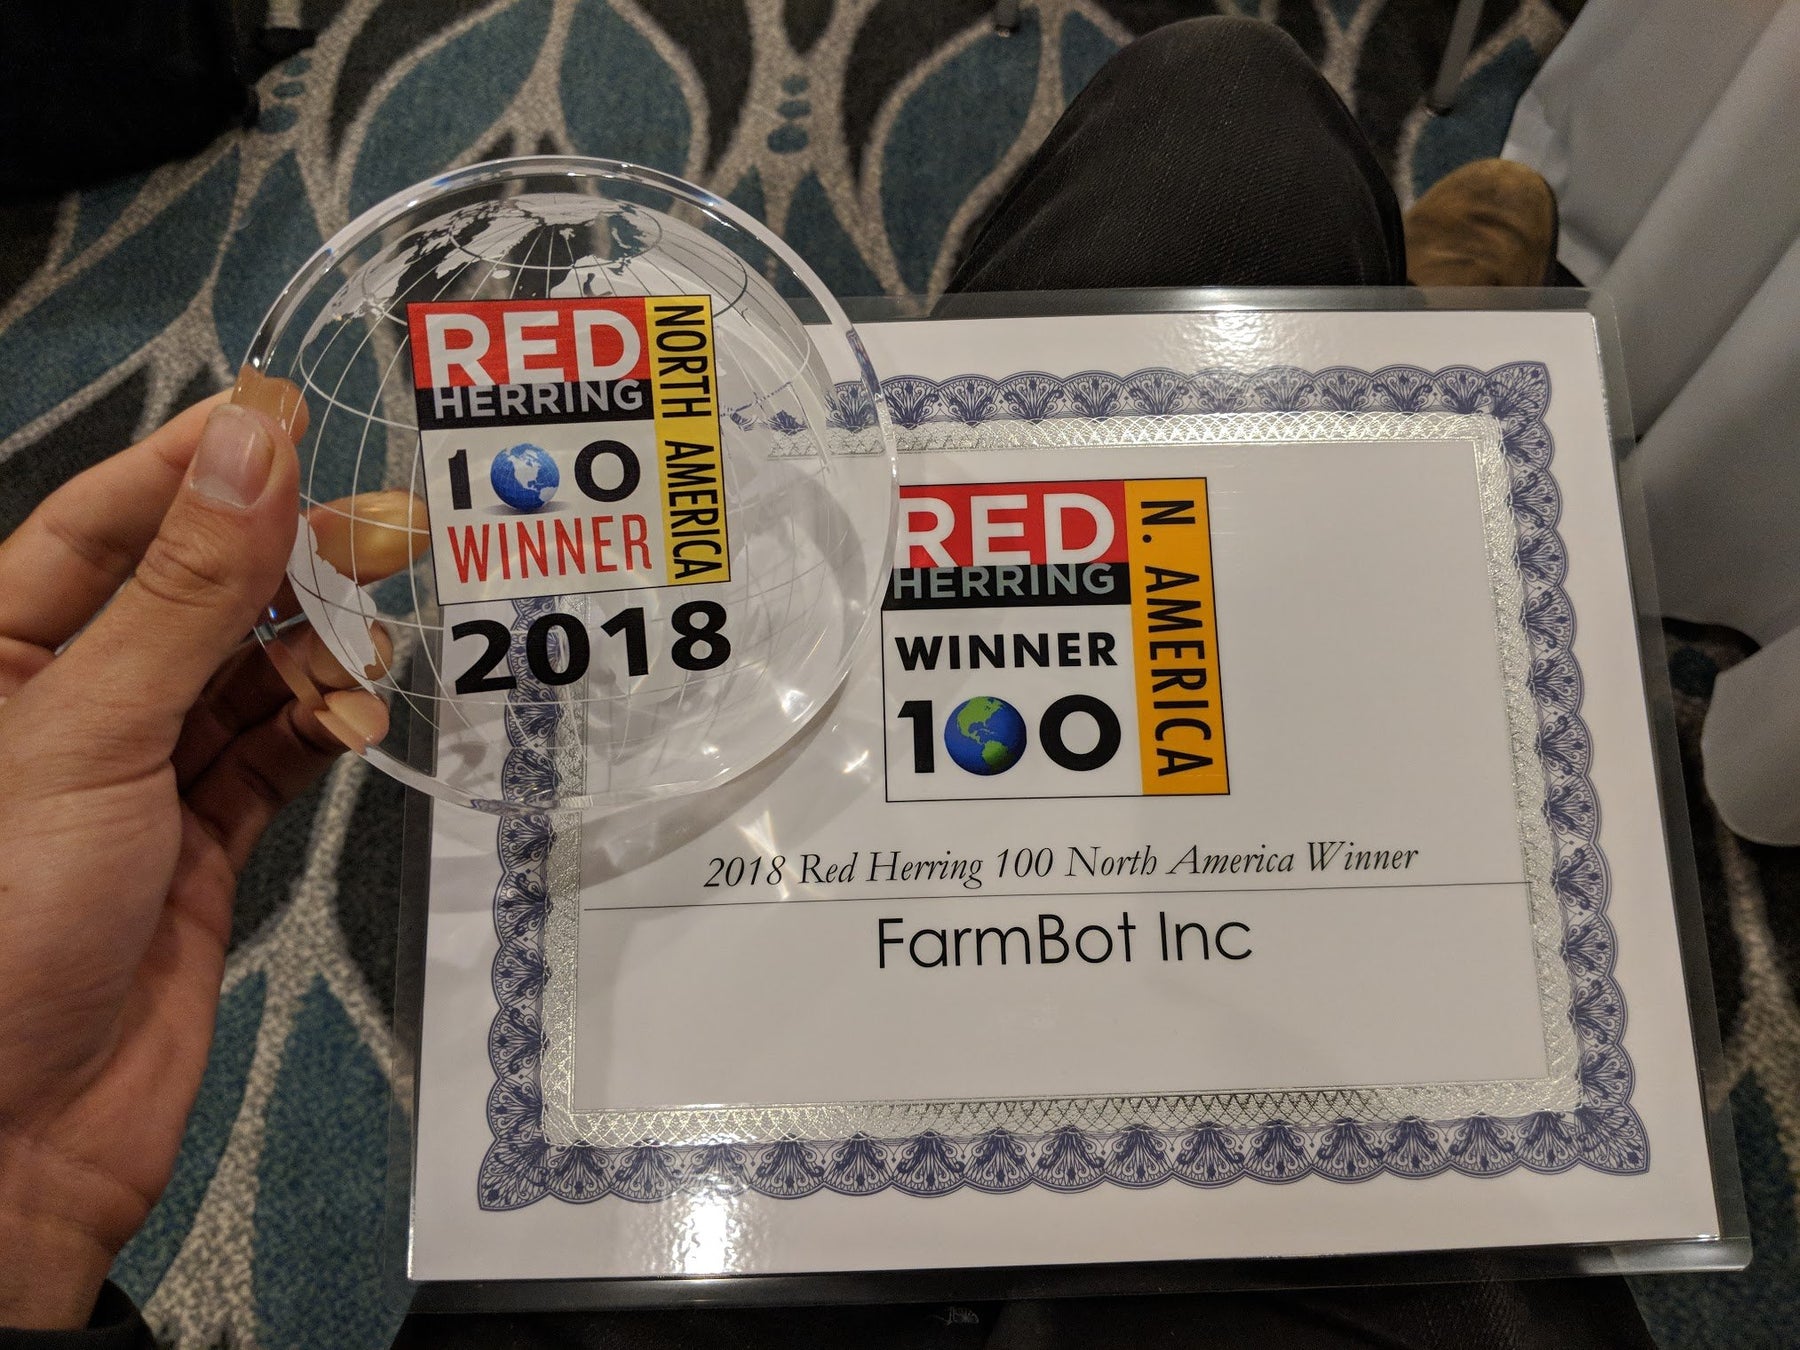 FarmBot Chosen as a 2018 Red Herring Top 100 North America Winner